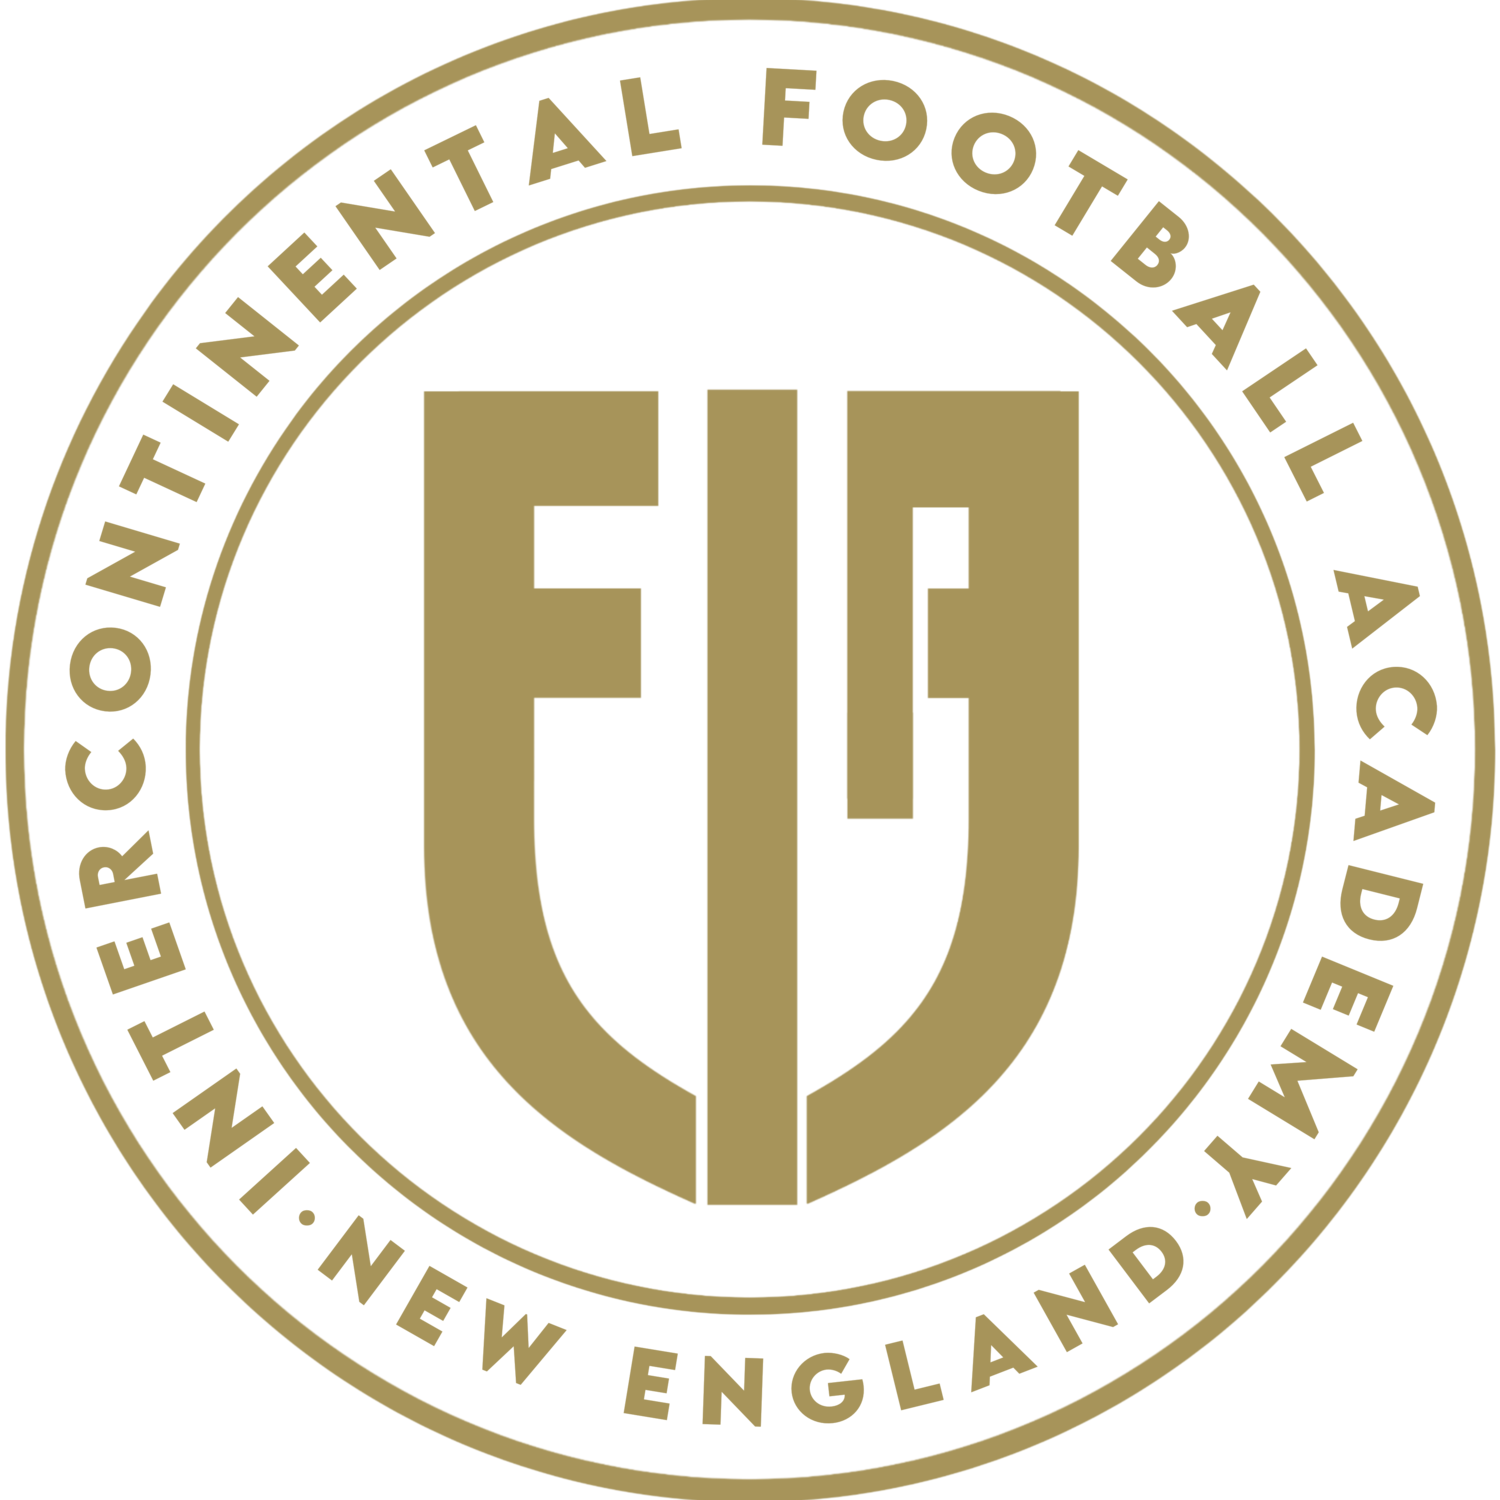 Intercontinental Football Academy of New England